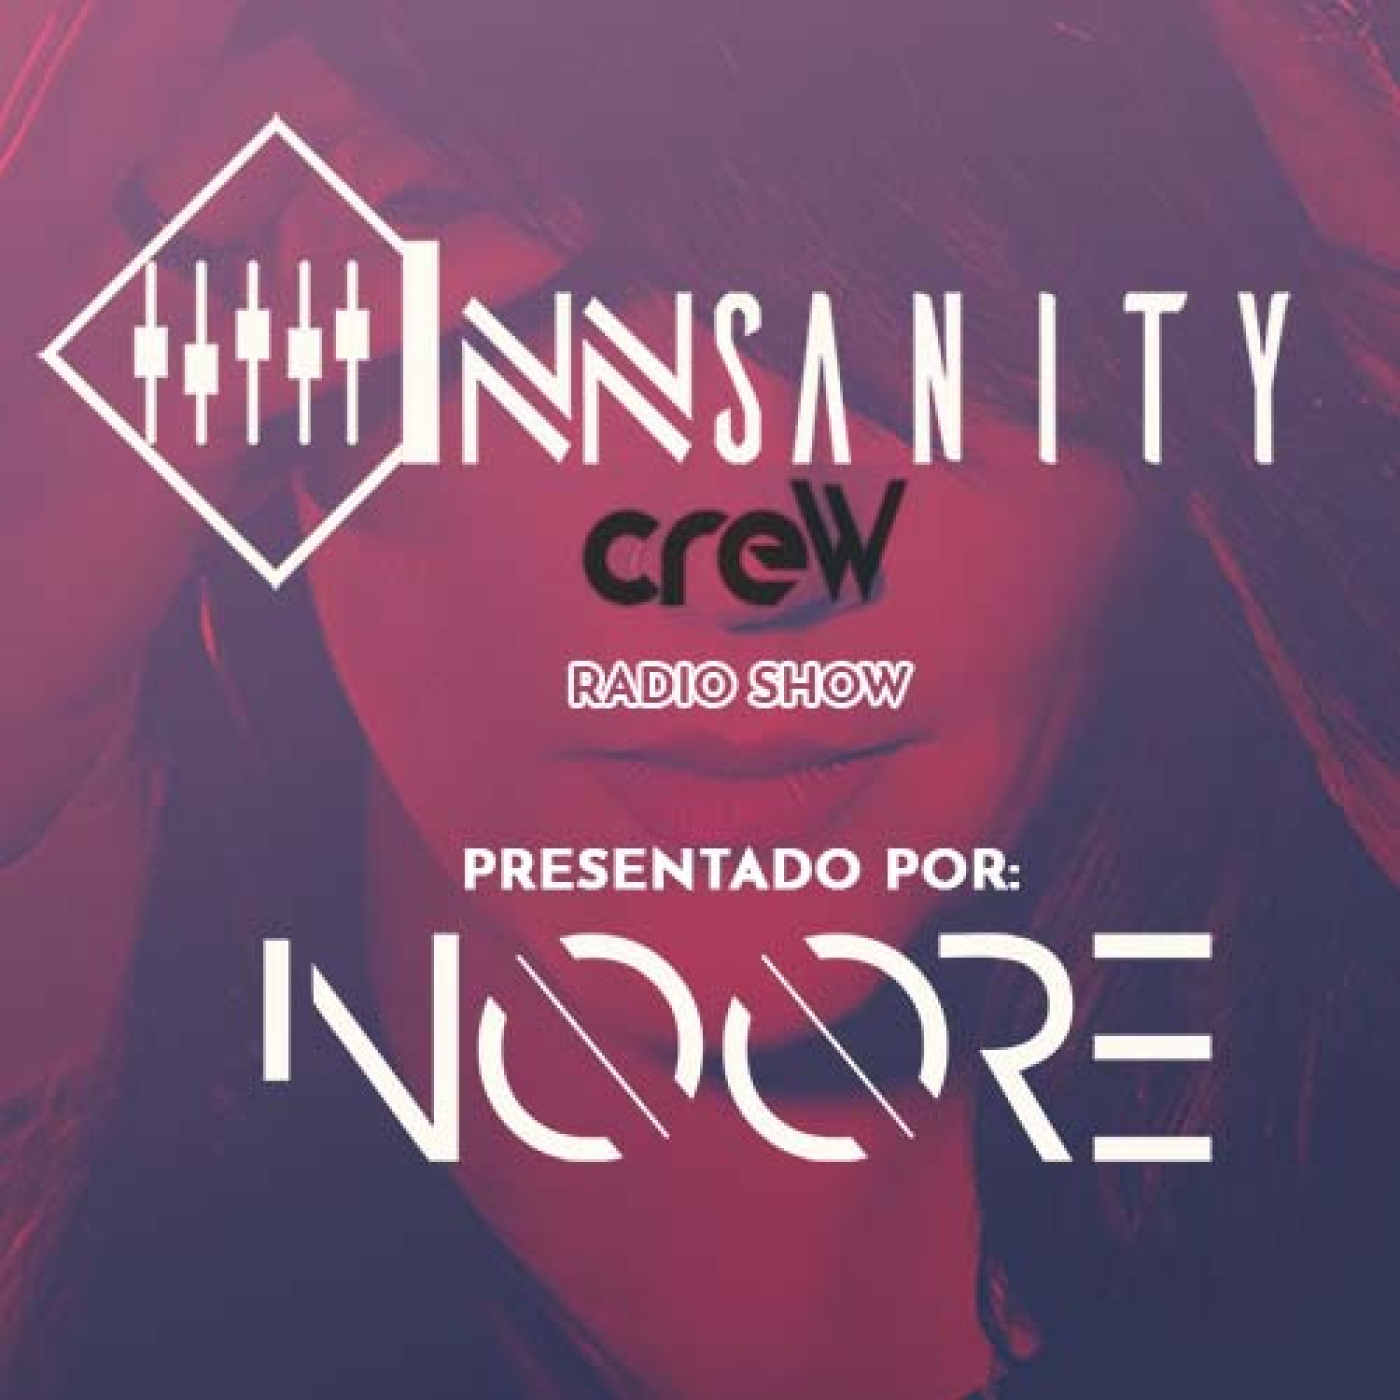 InNsanity Crew Radio Show by NOORE ::: Episode 094 ::: Season 6 :::